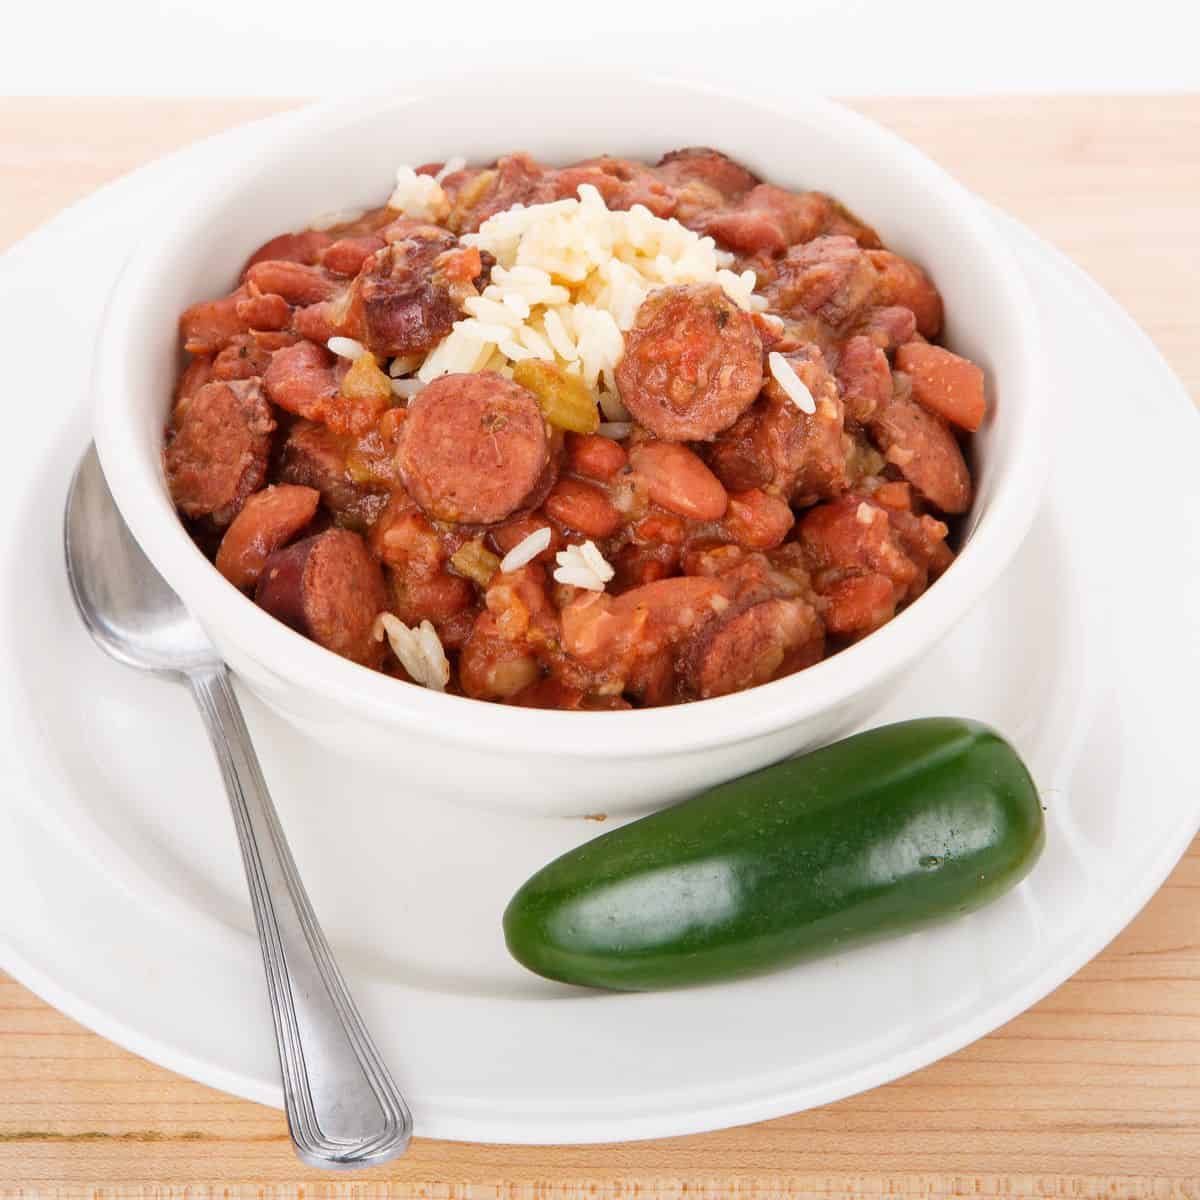 https://thriftyjinxy.com/wp-content/uploads/2014/02/Crockpot-Red-Beans-and-Rice.jpg